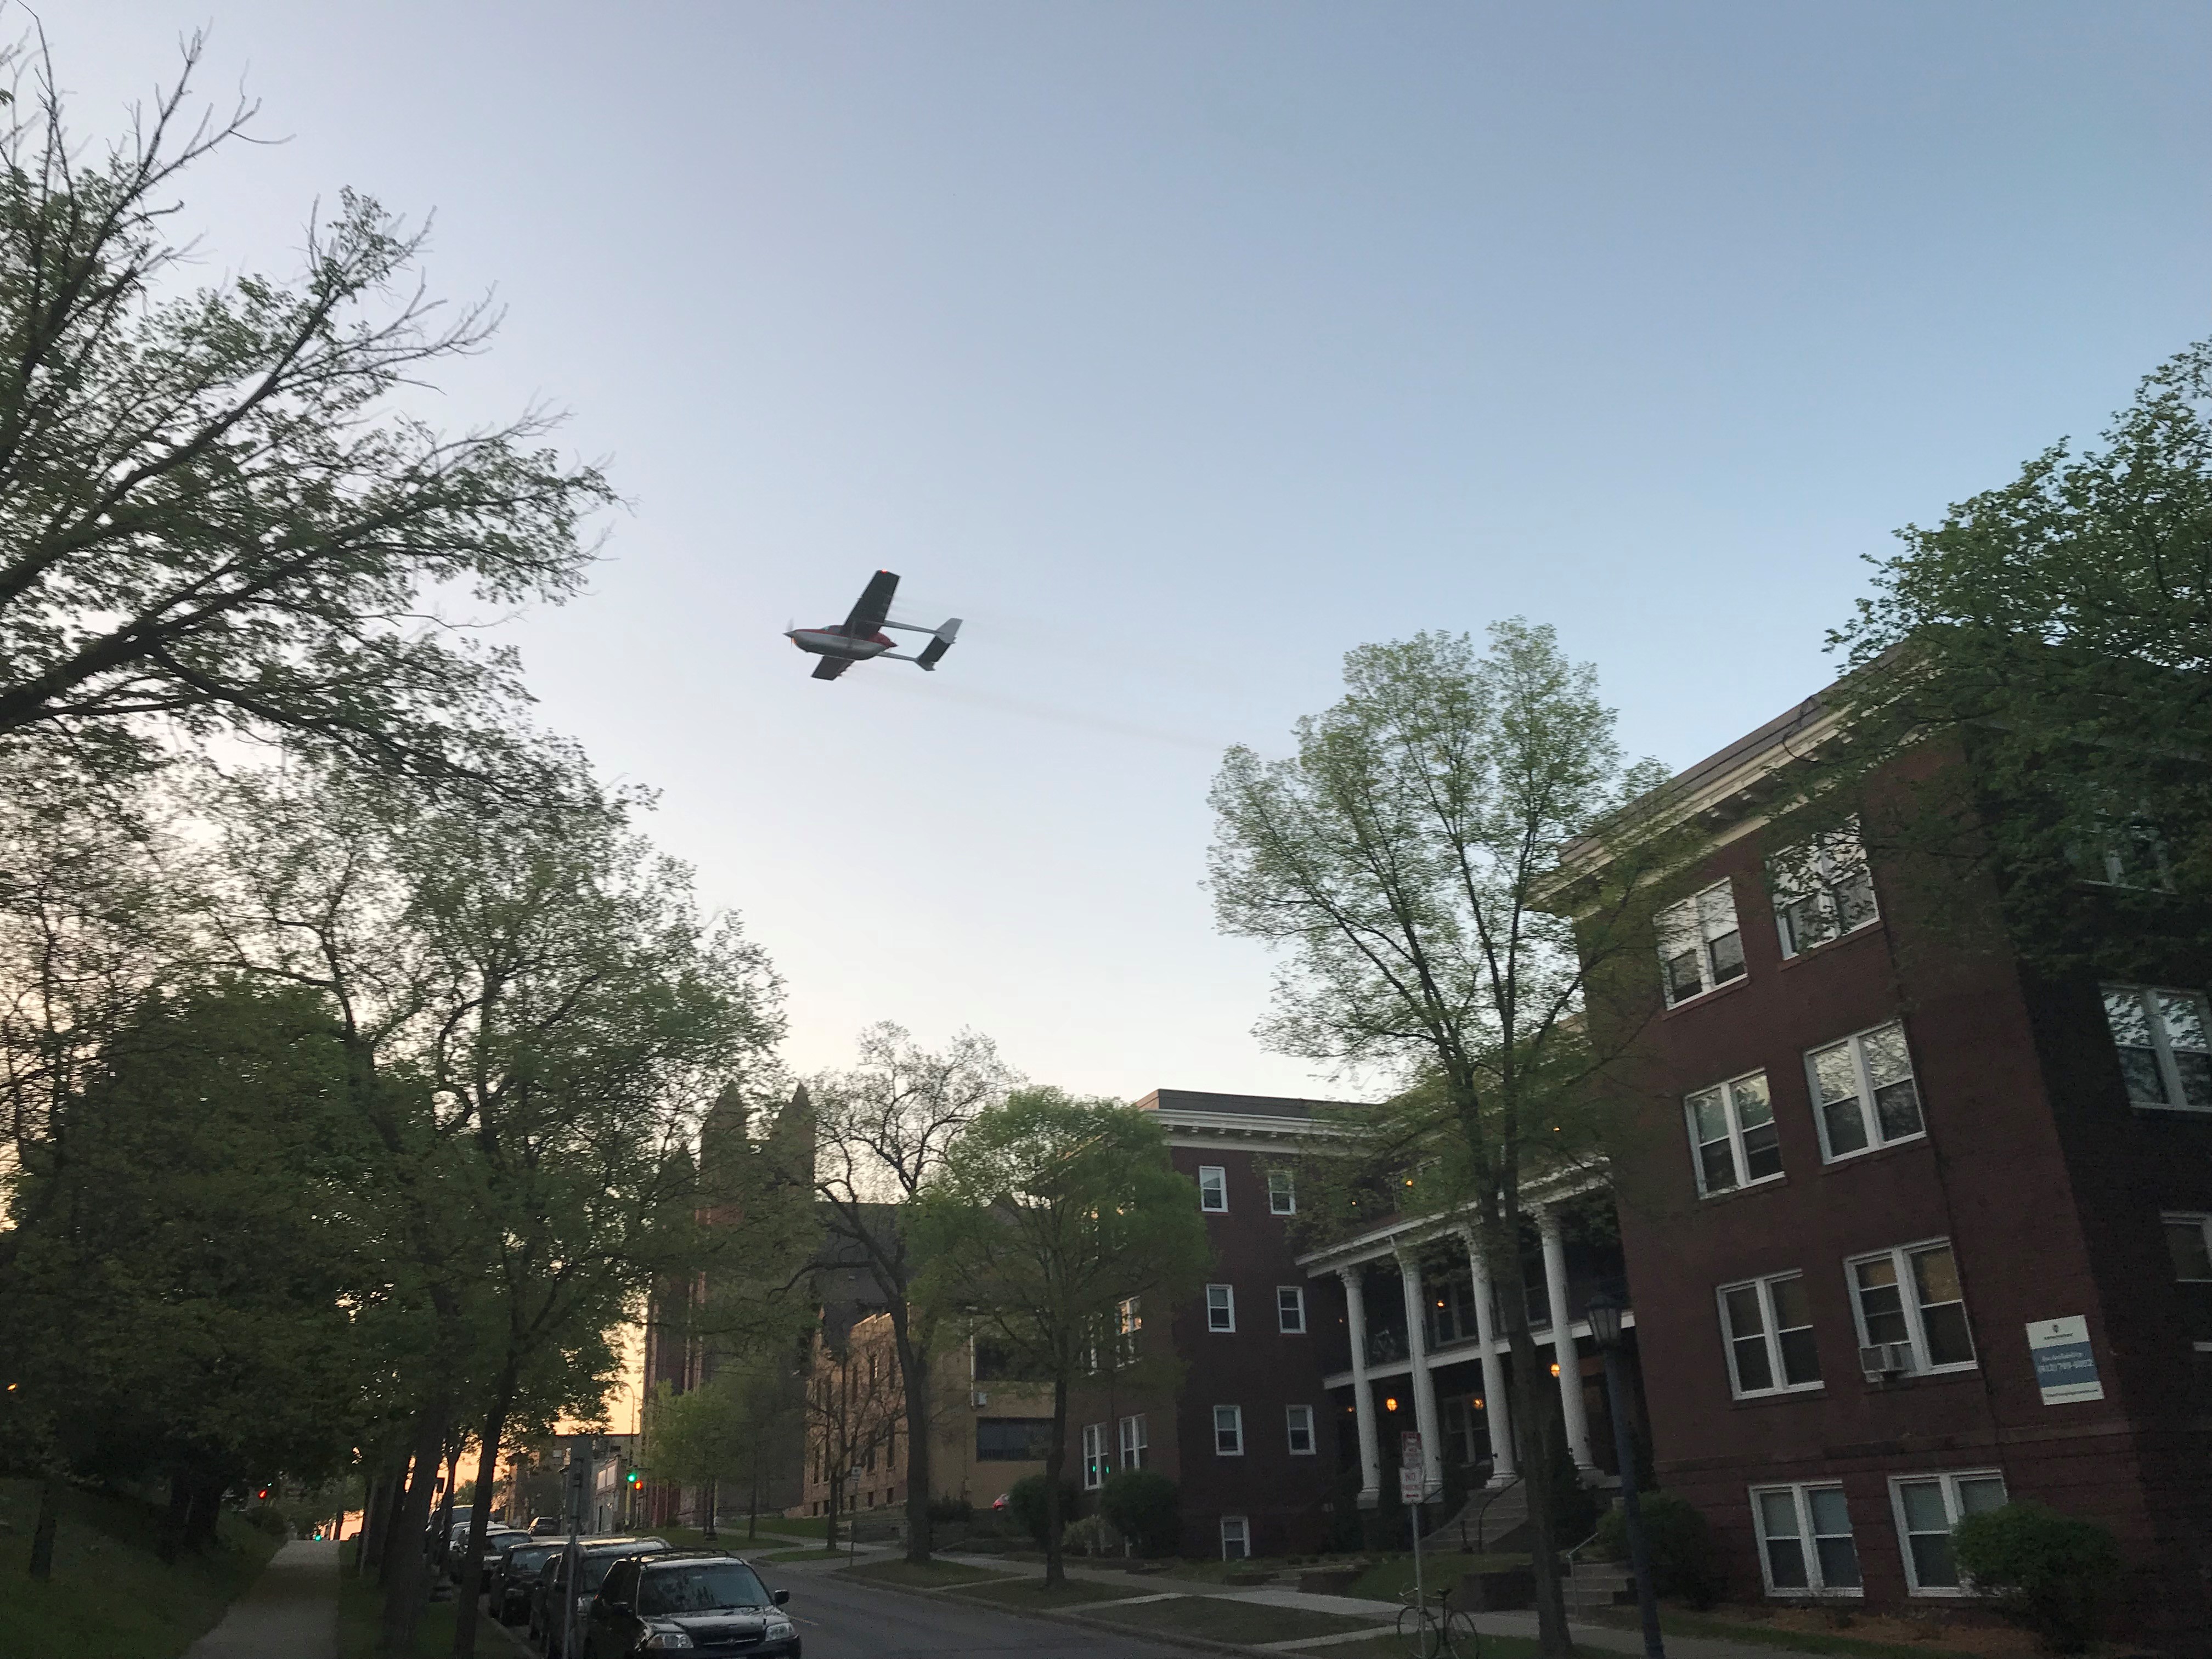 A plane conducts a gypsy moth treatment in an urban area